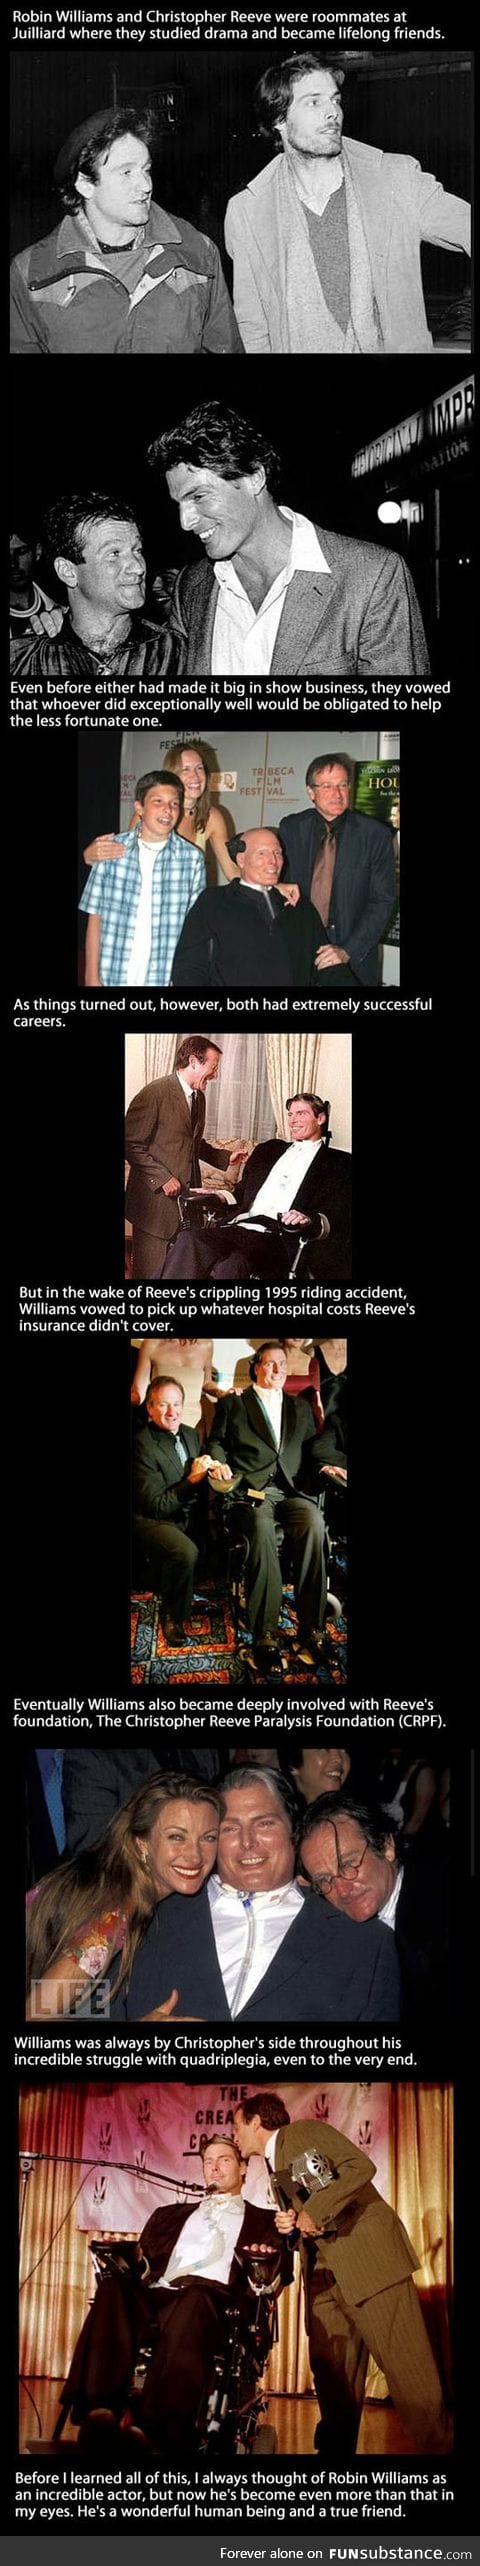 Robin Williams was the true best friend